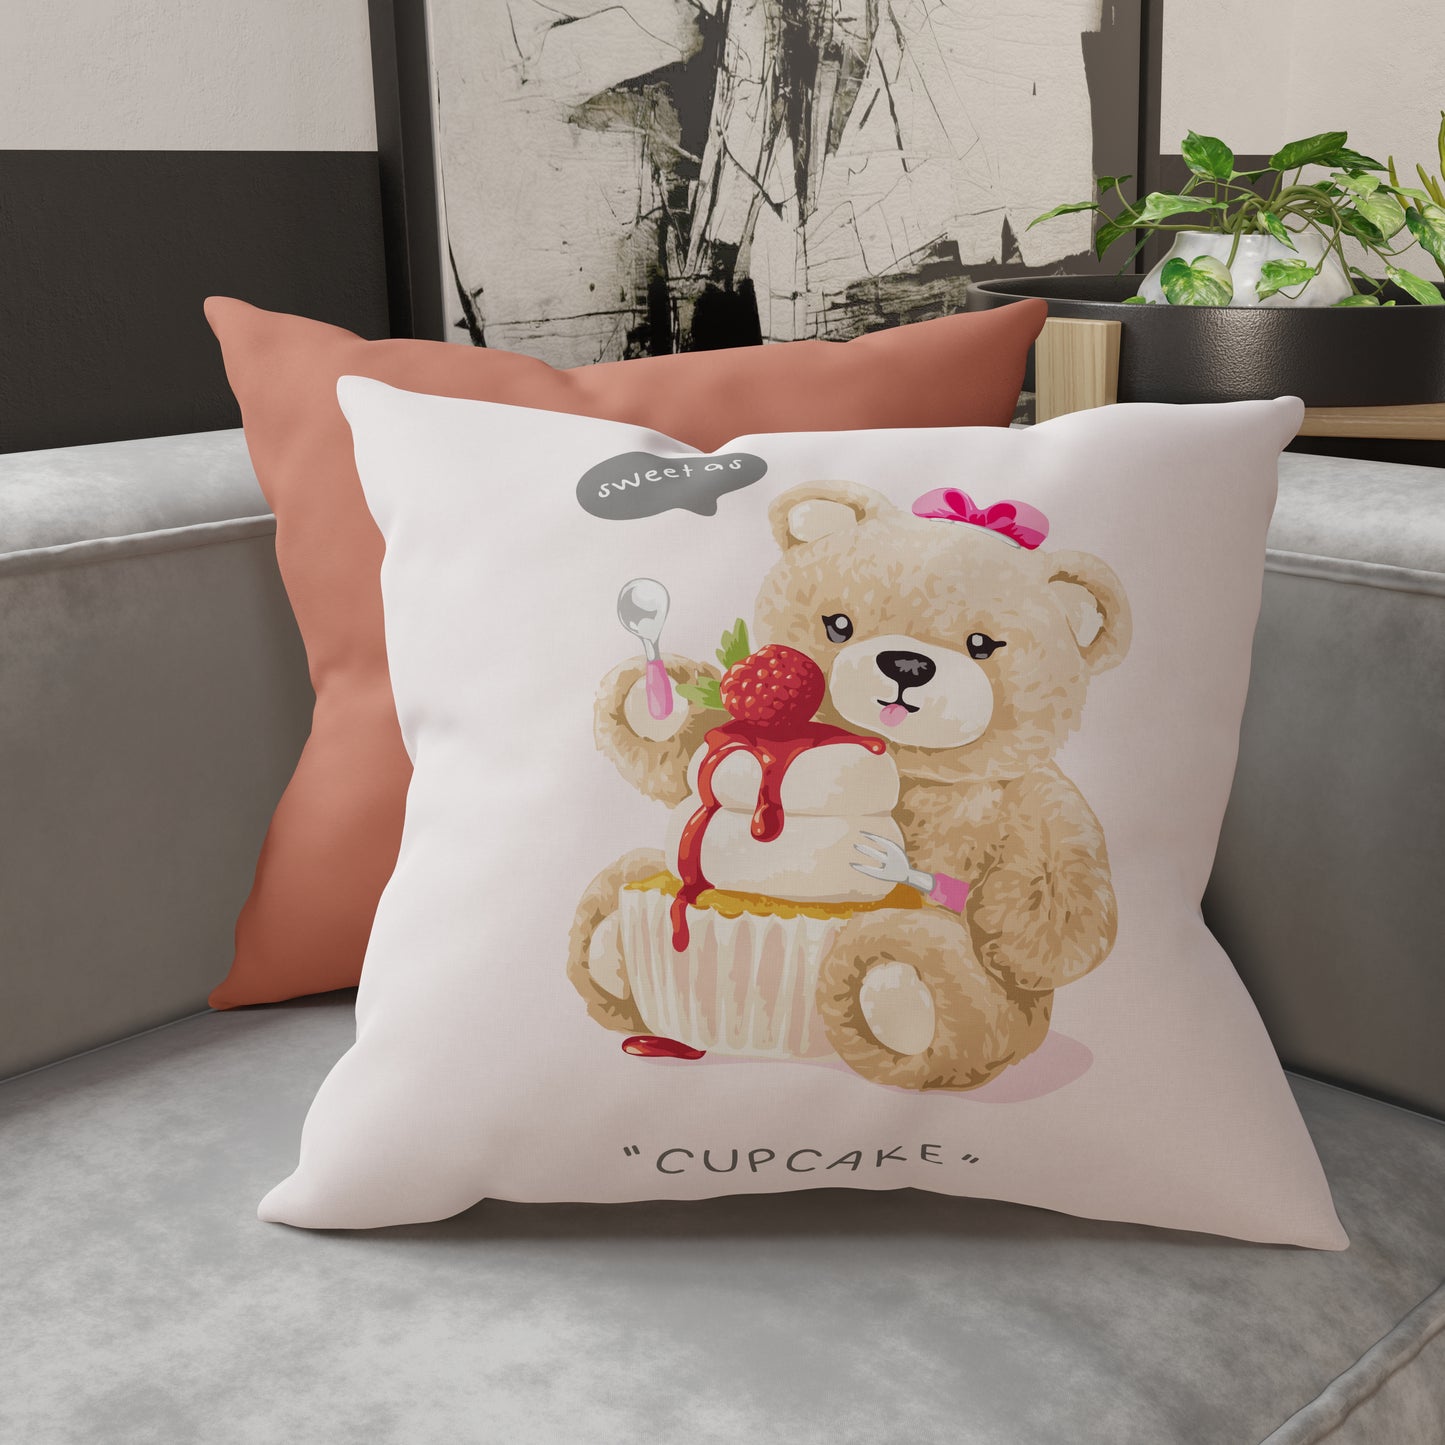 Cushions, Sofa Cushion Covers, Furnishing Cushions in Teddy Cupcake Digital Print